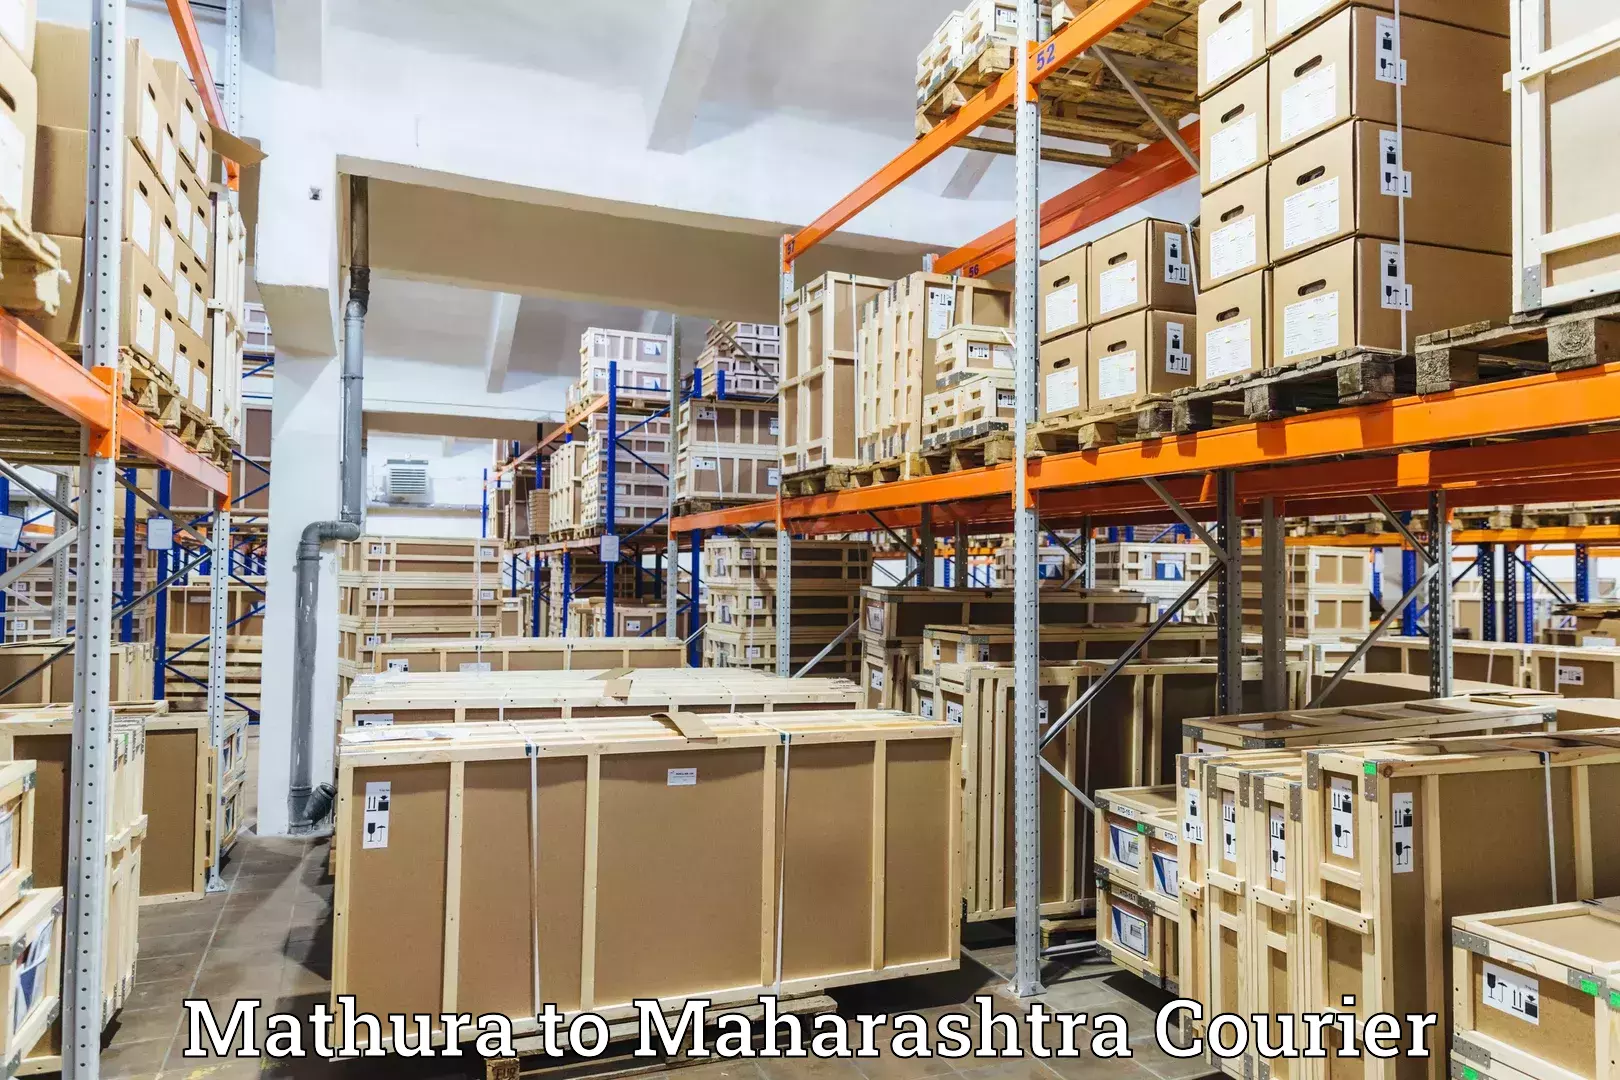 Nationwide delivery network Mathura to Maharashtra